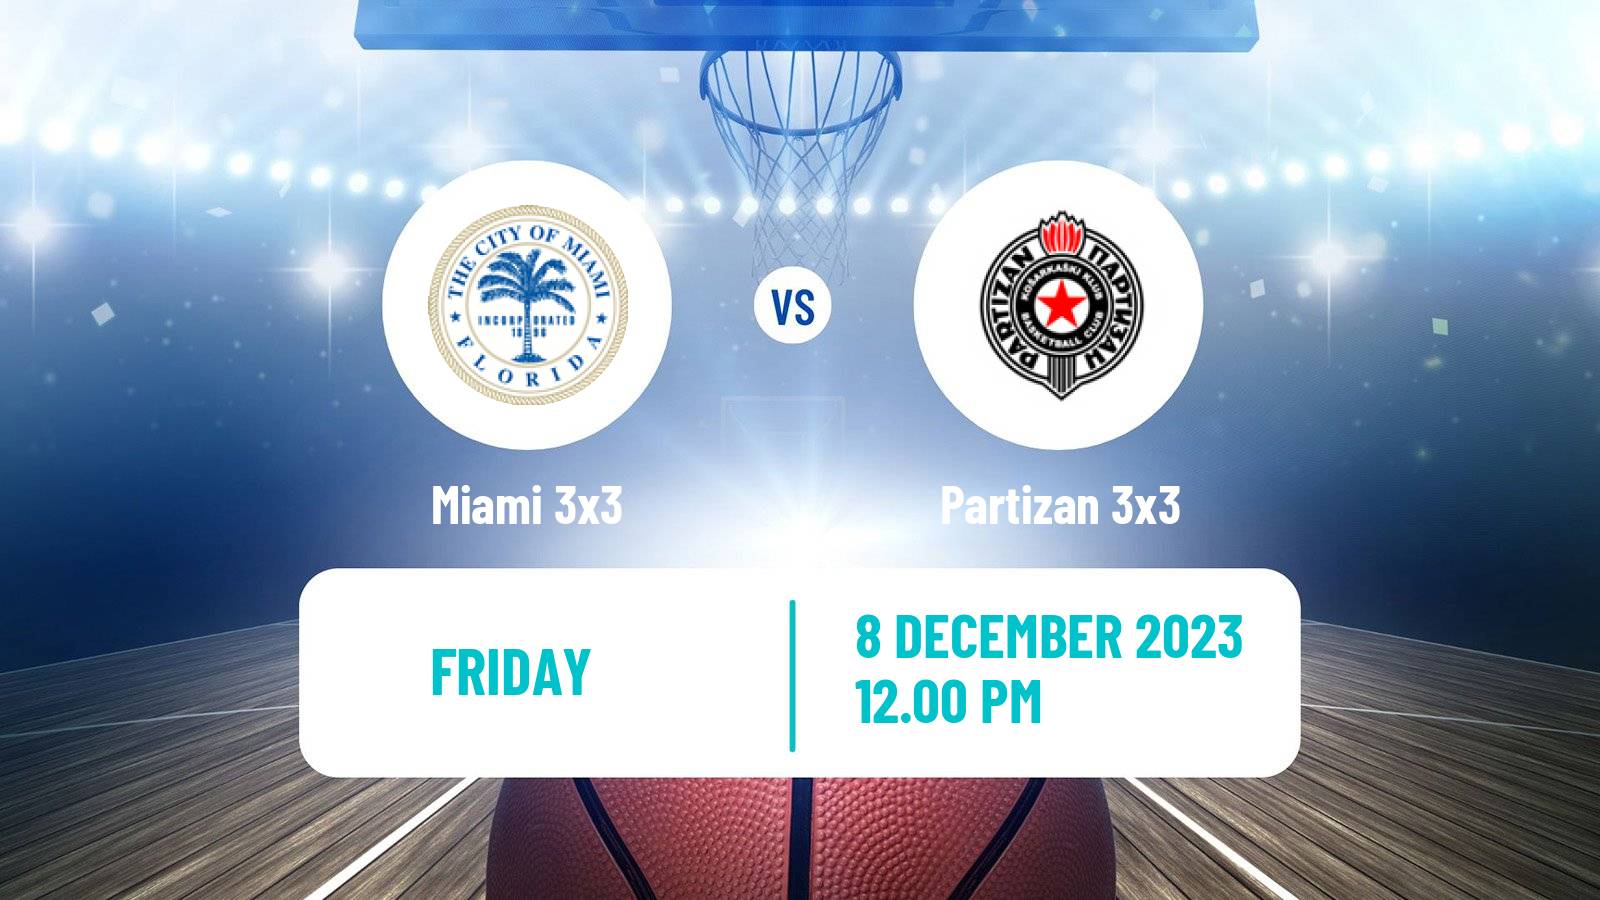 Basketball World Tour Final 3x3 Miami 3x3 - Partizan 3x3